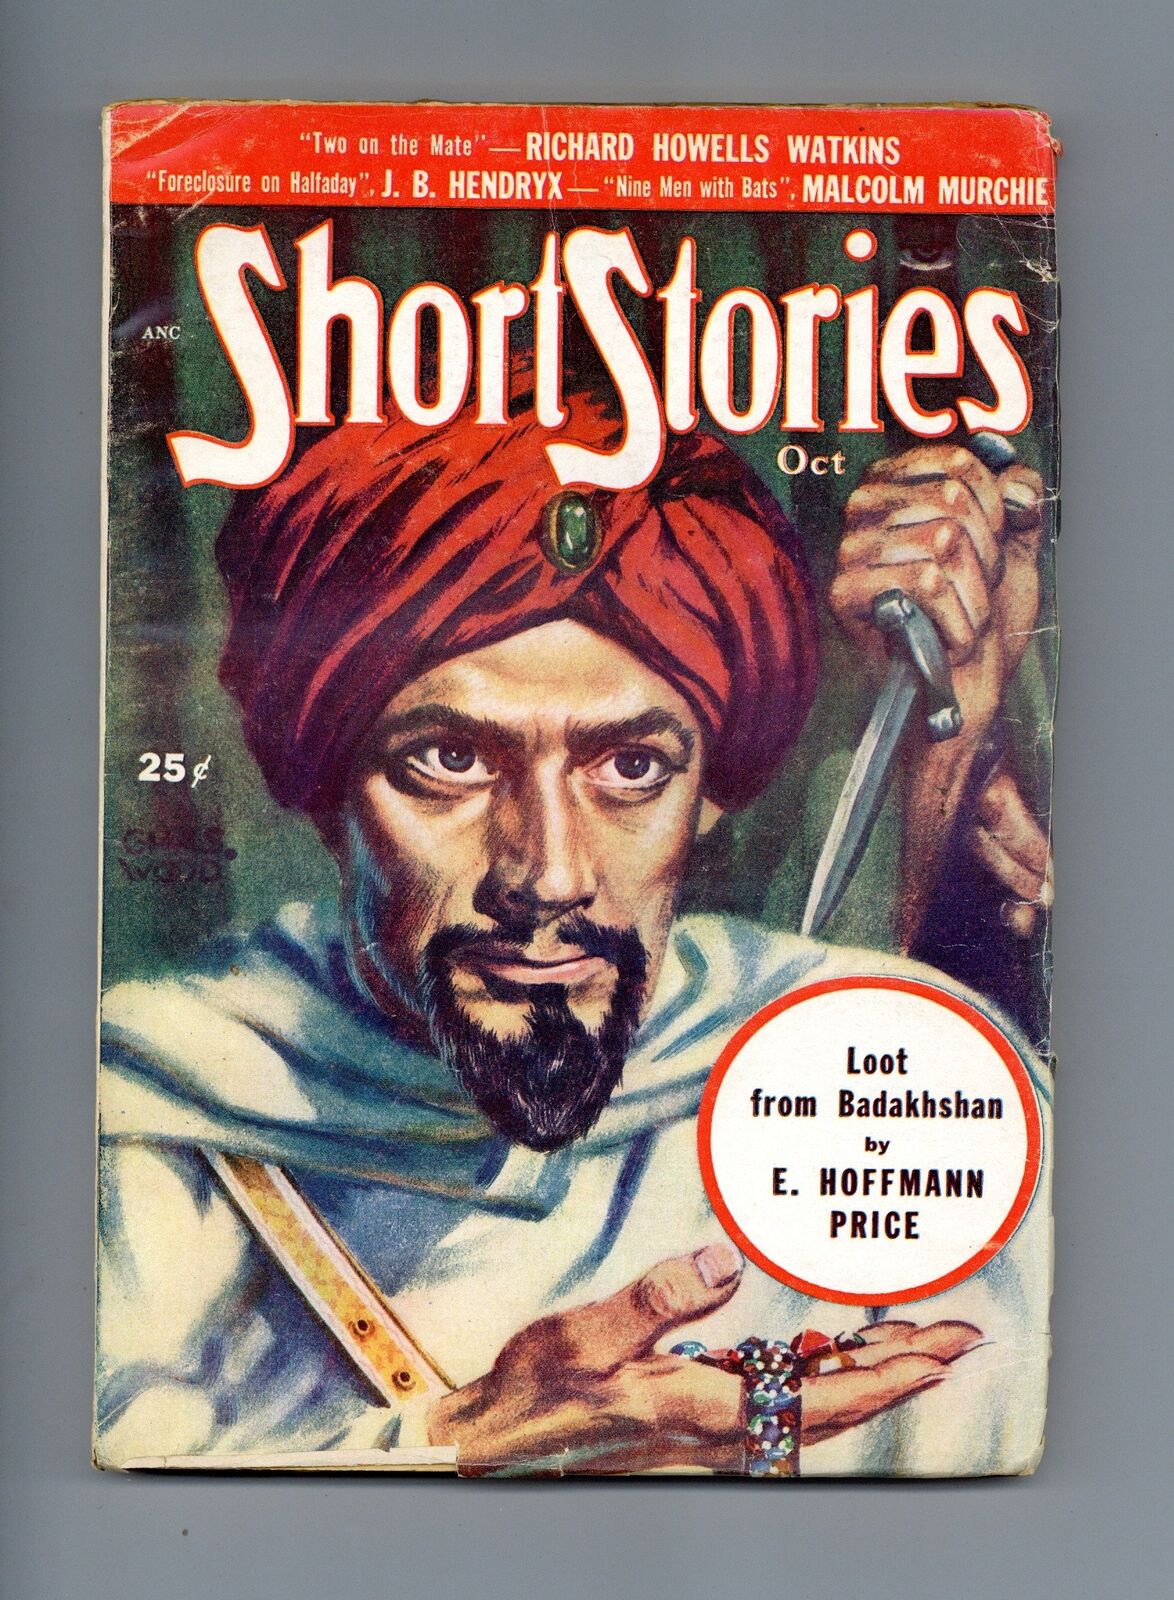 Short Stories Pulp Oct 1949 Vol. 208 #4 FN